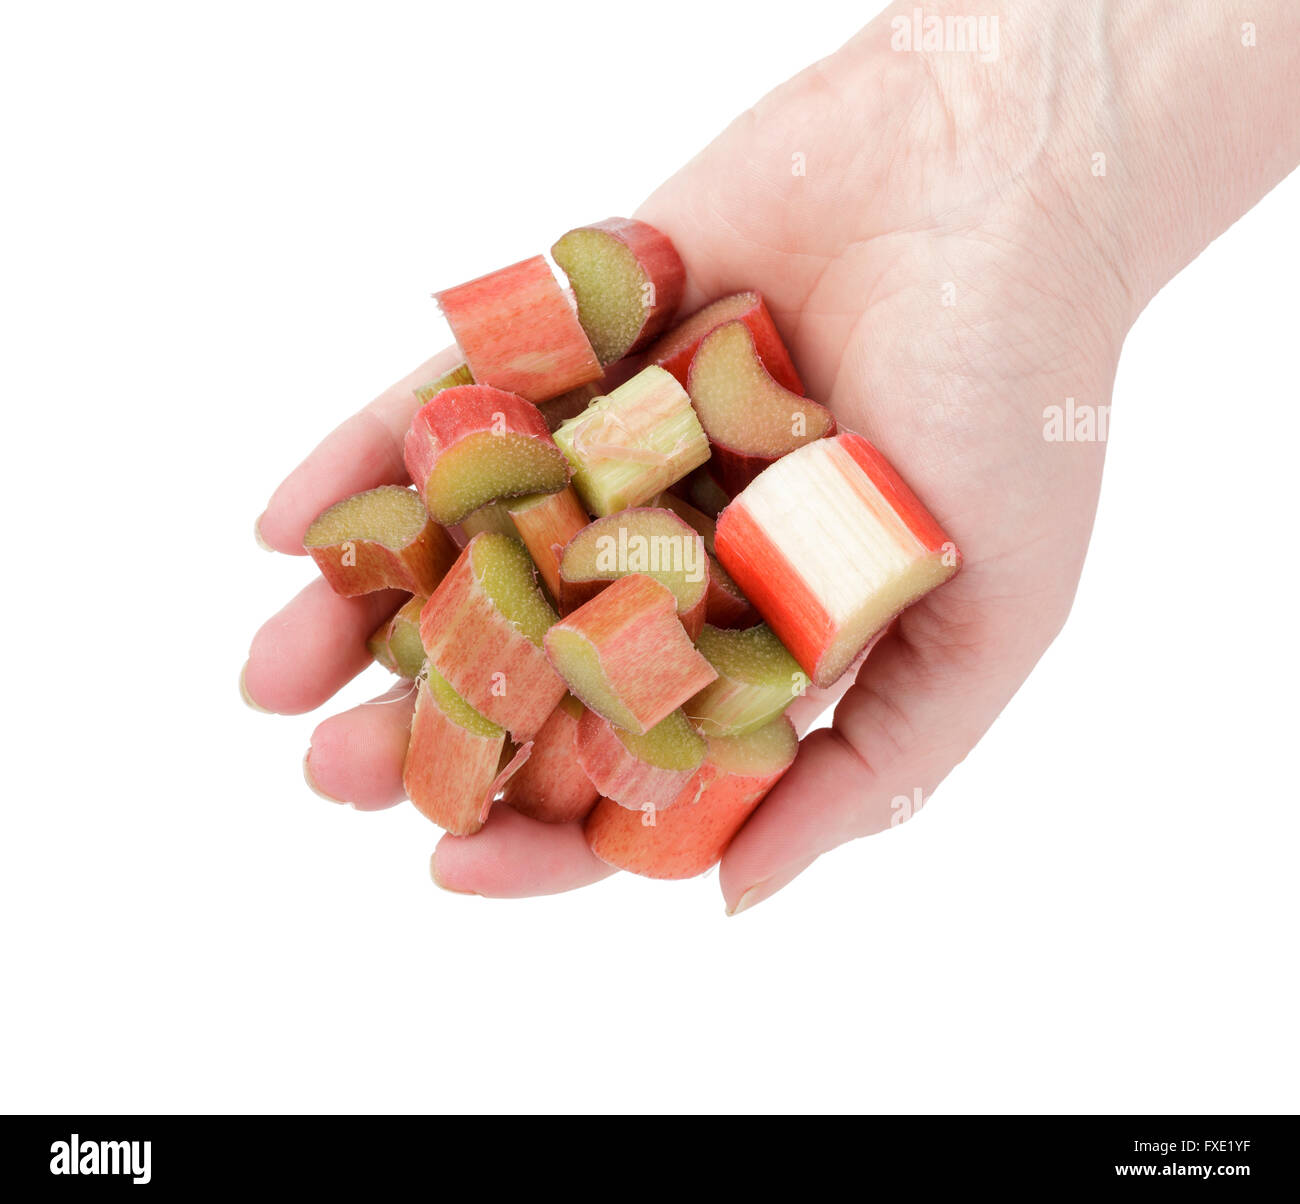 hand holding rhubarb Stock Photo